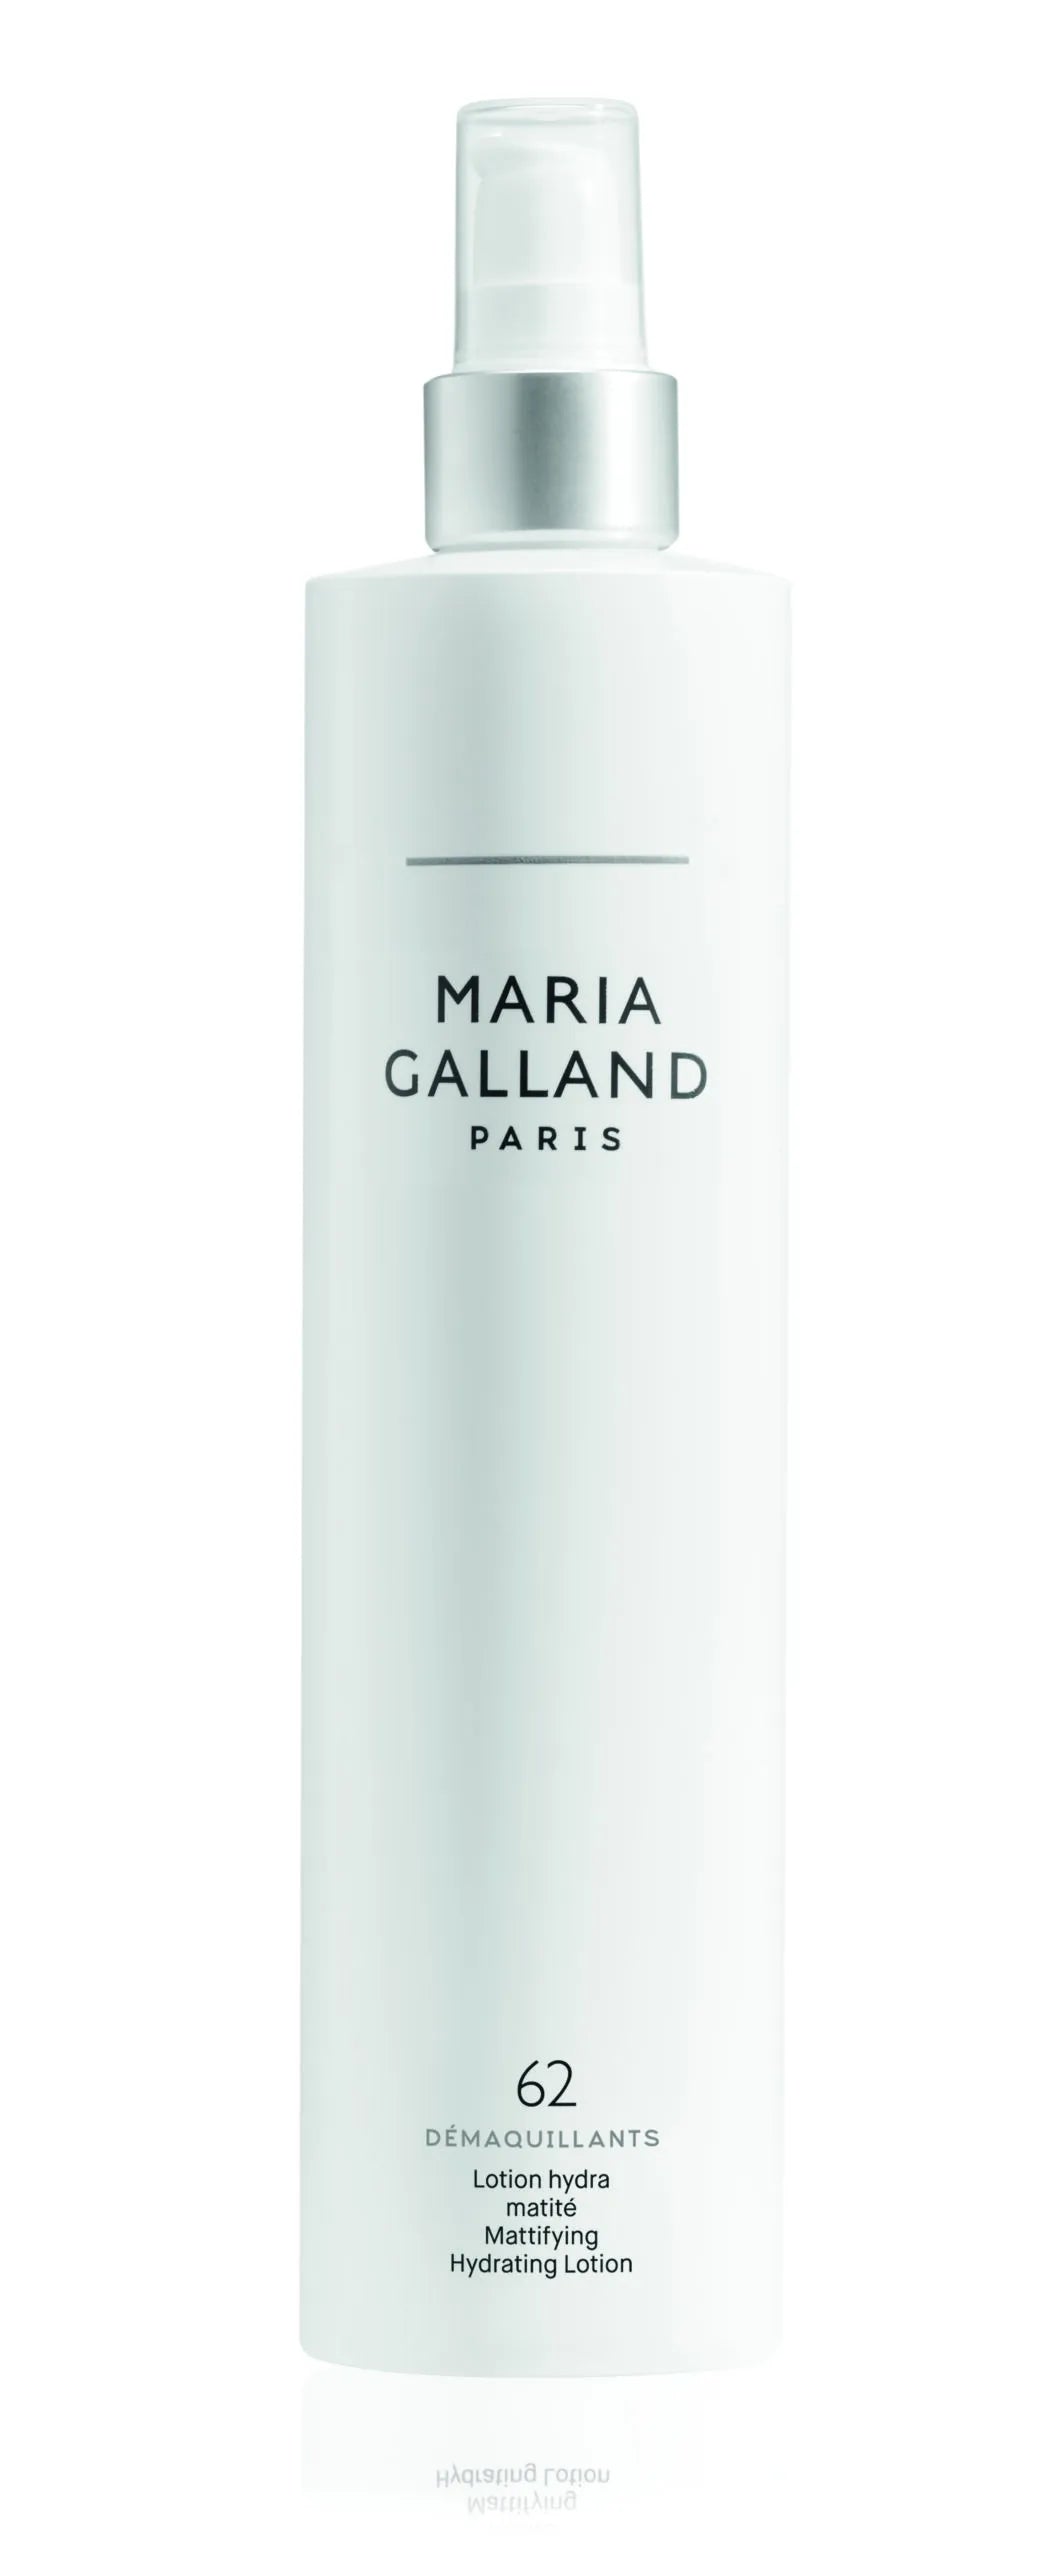 MARIA GALLAND 62 Mattifying Hydrating Lotion 400ml (Limited Edition)